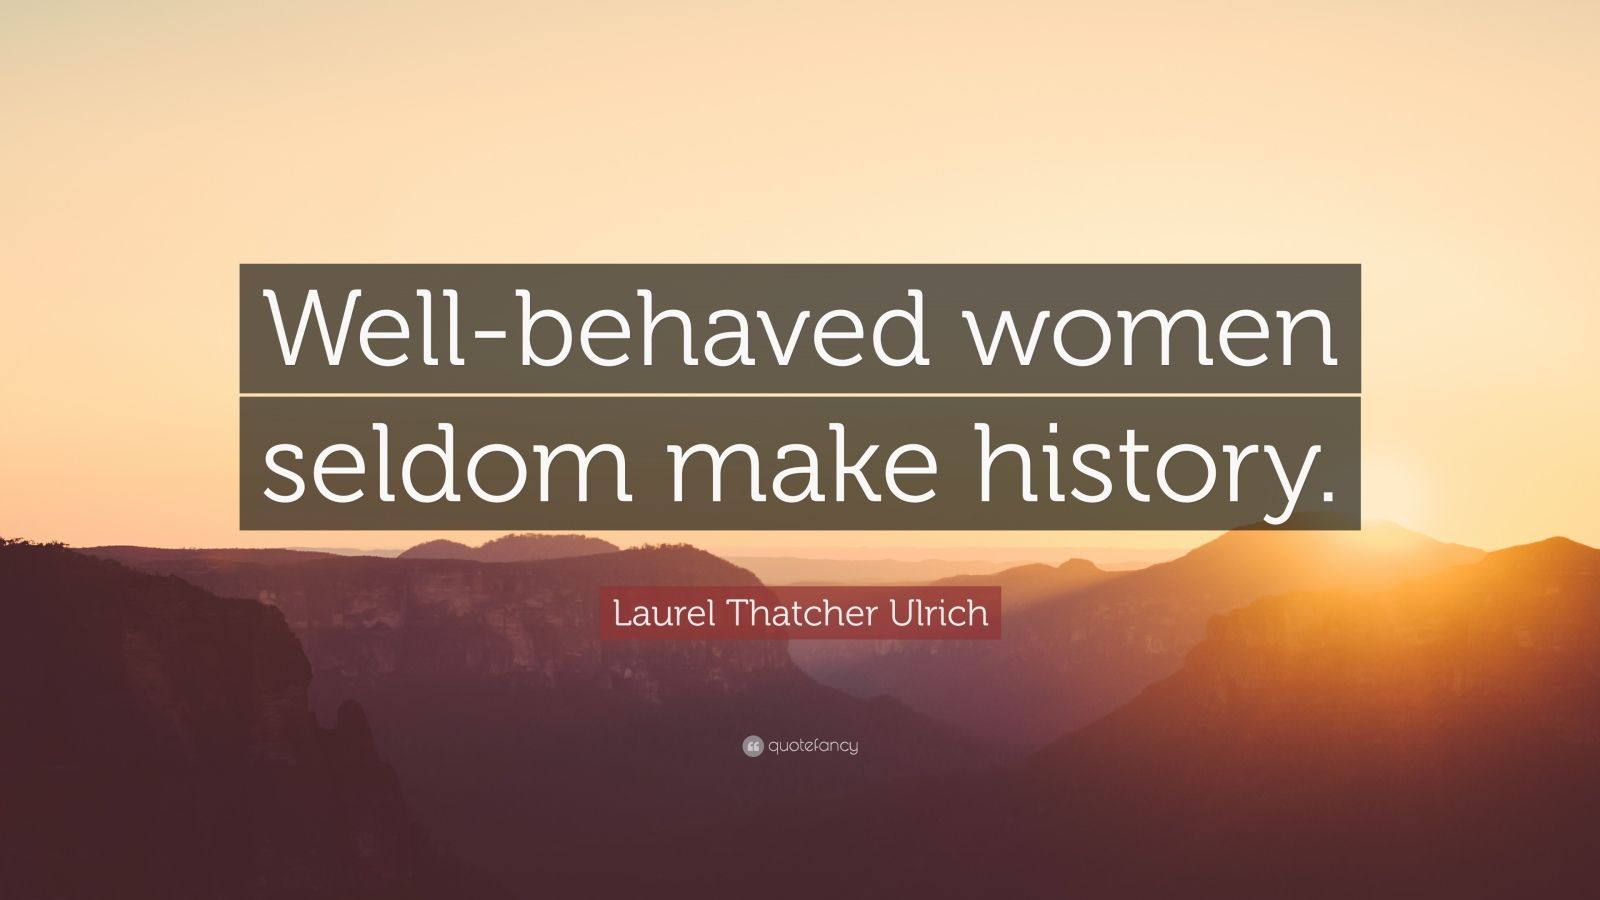 Laurel Thatcher Ulrich Quote: “Well-behaved women seldom make history.”